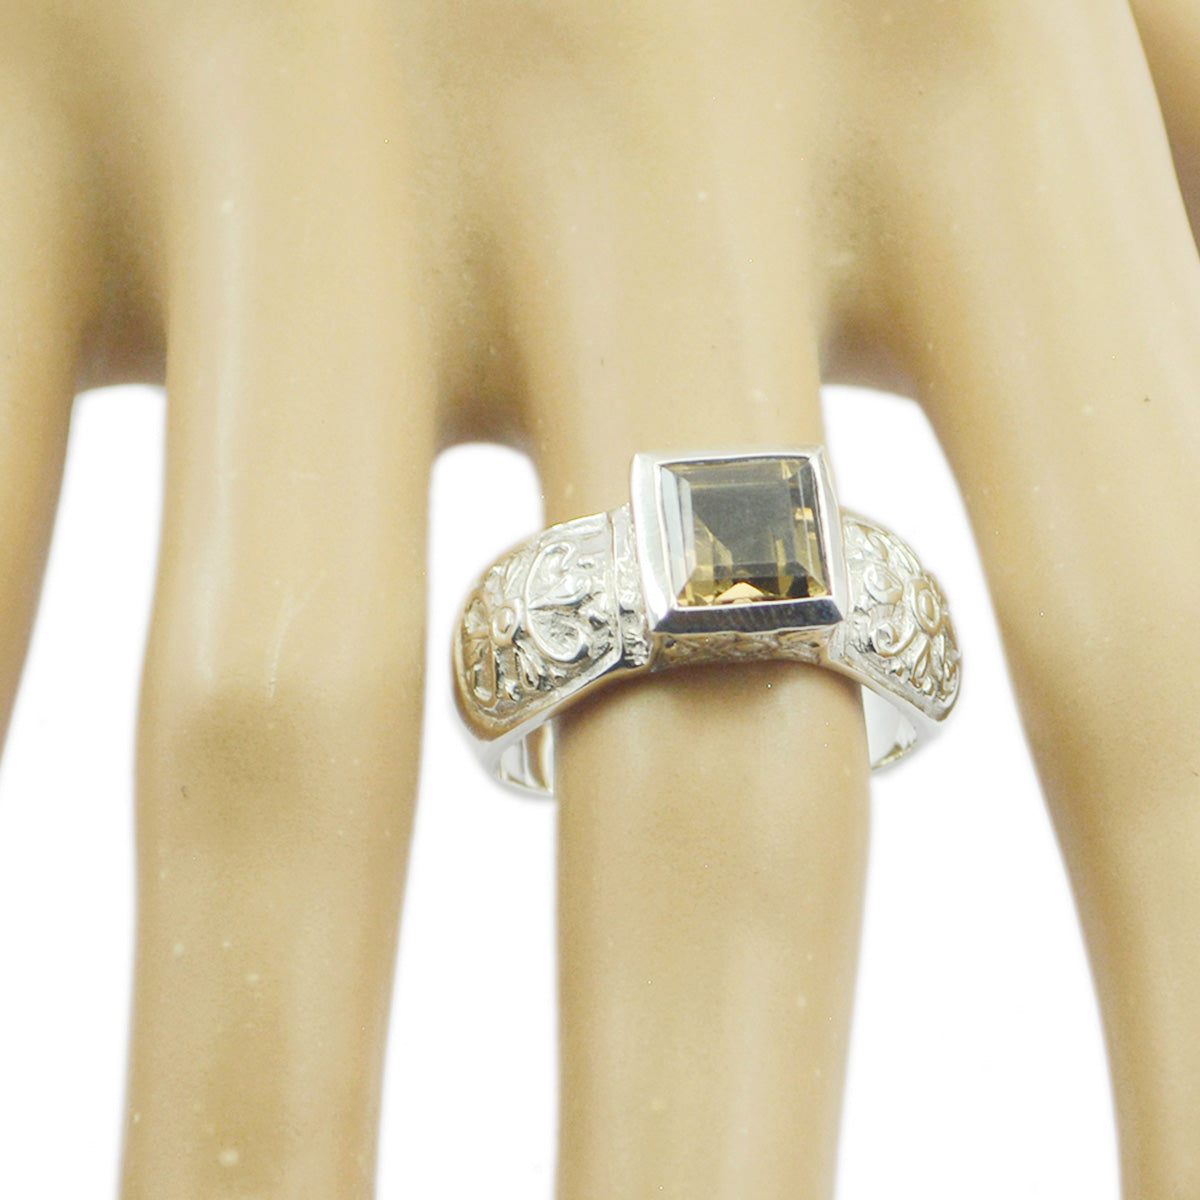 Riyo Appealing Gems Smoky Quartz 925 Silver Rings Jewelry Scale